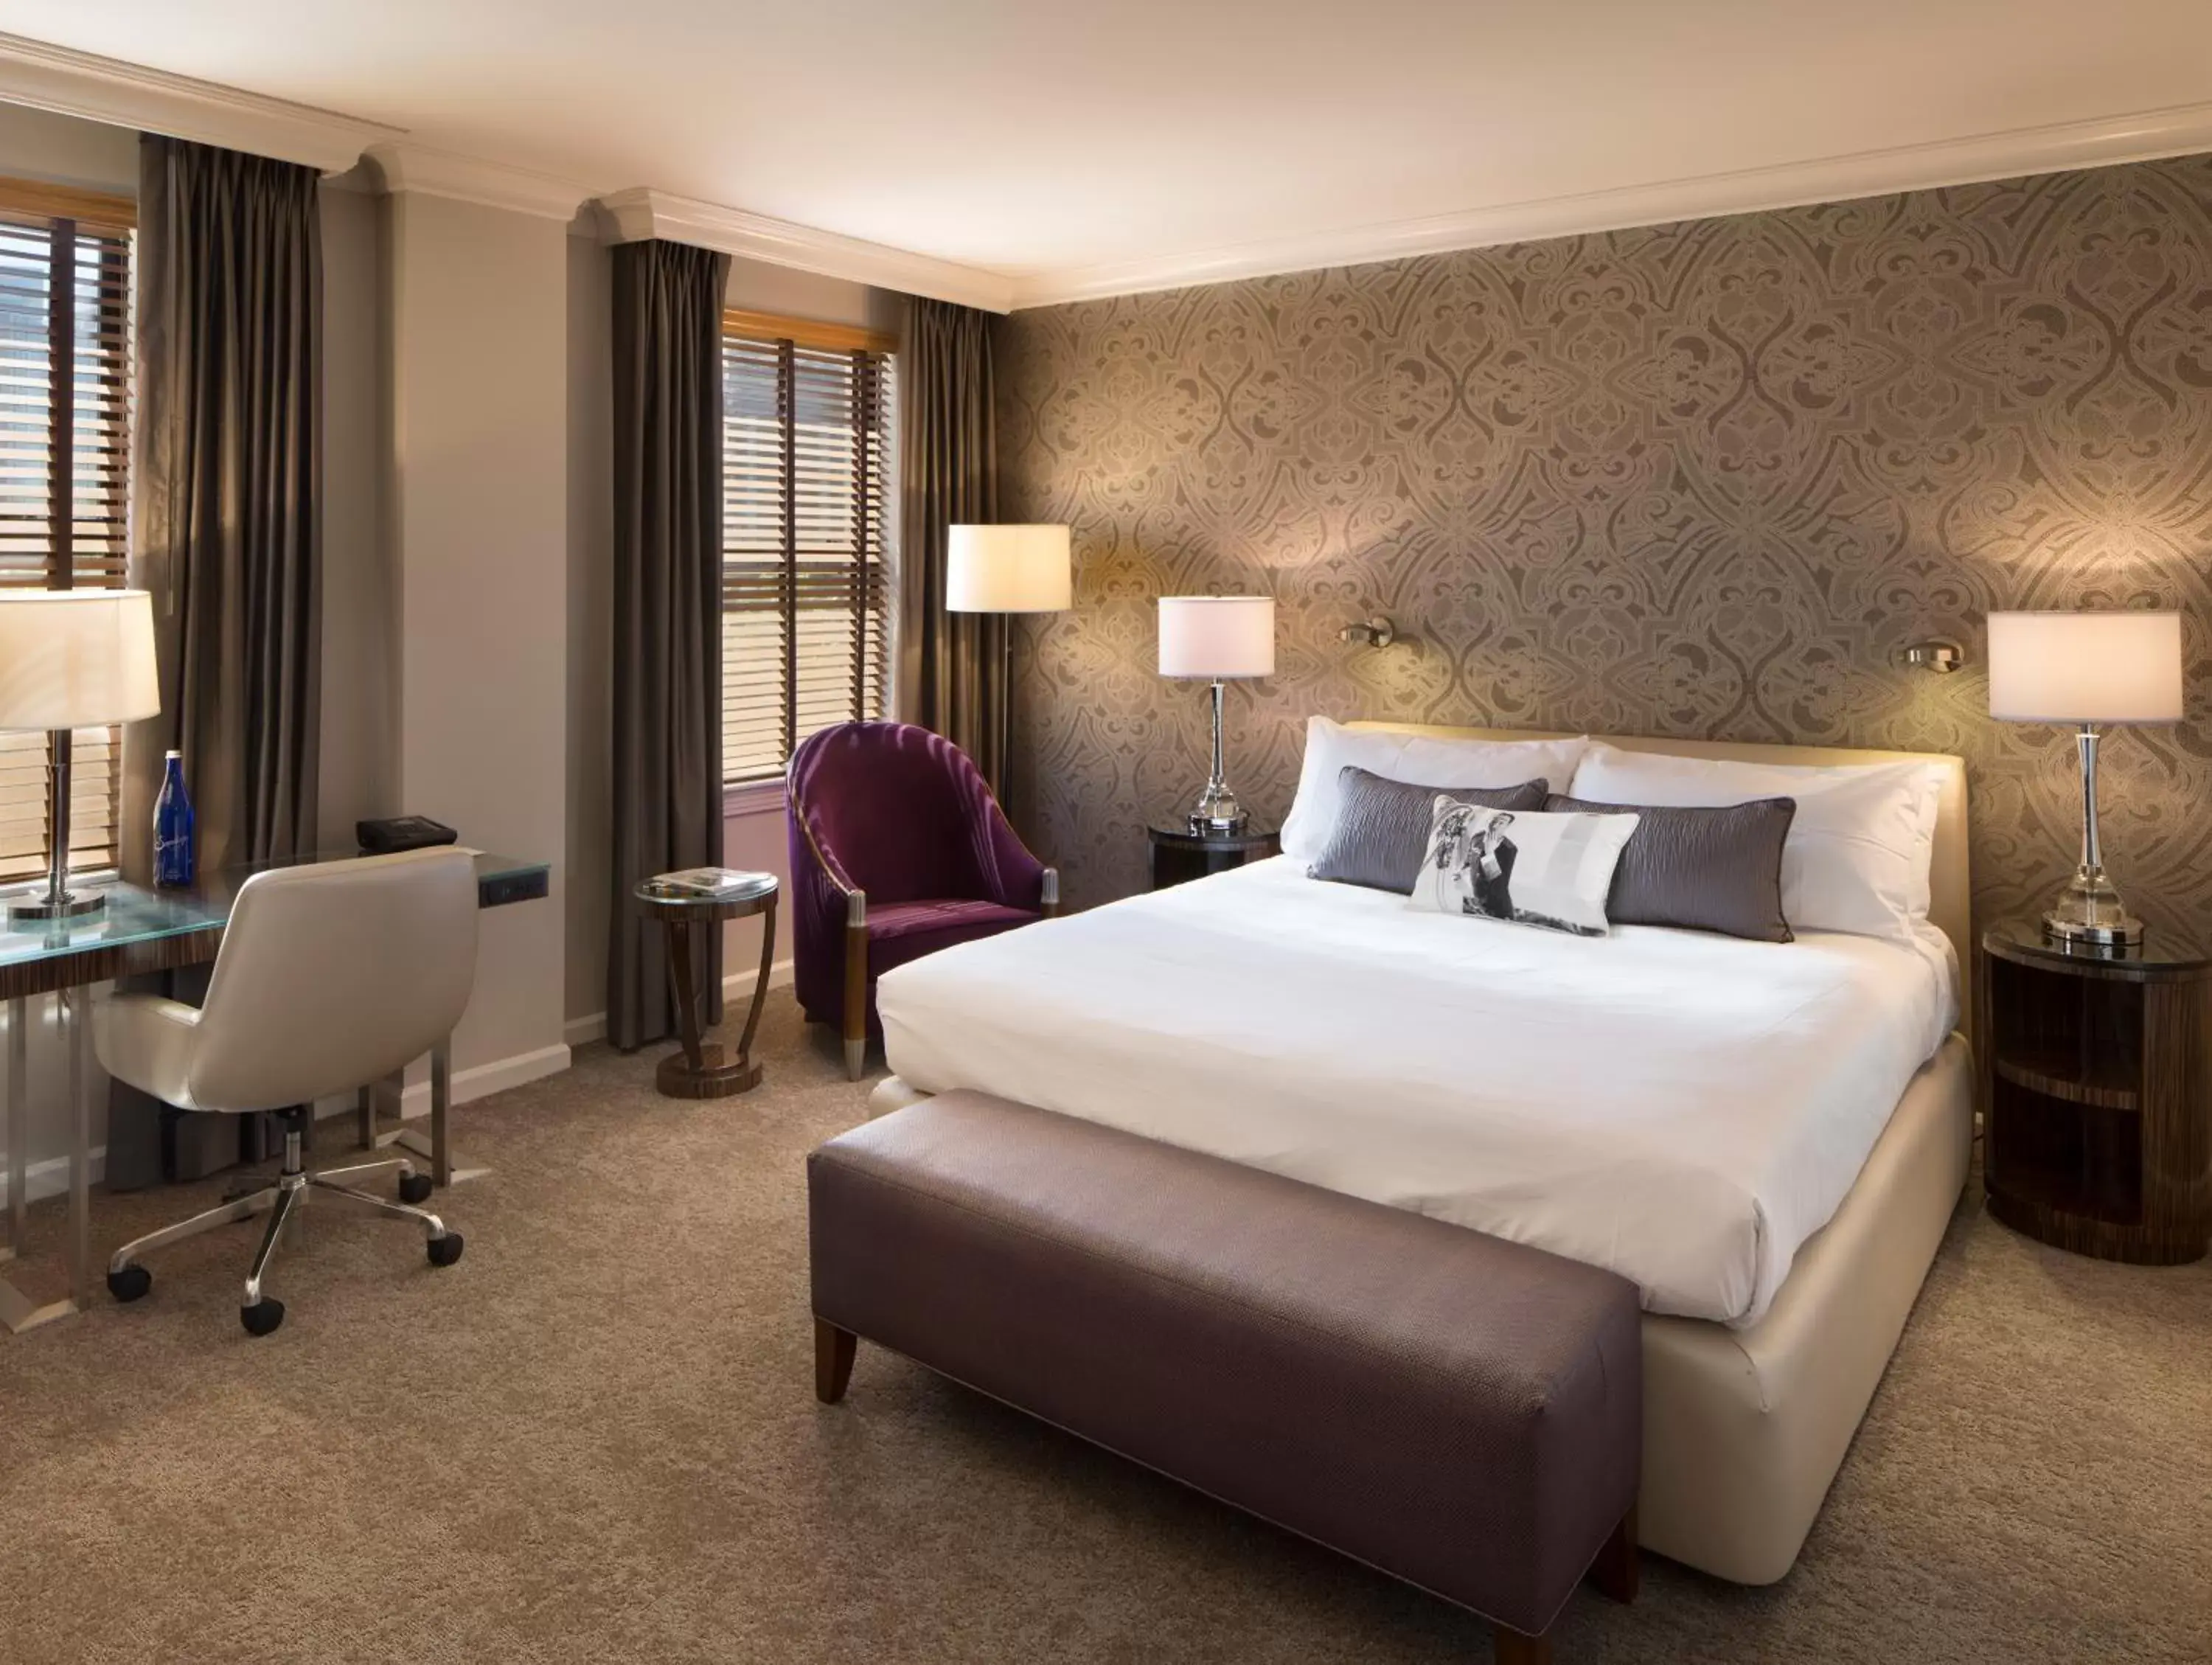 Corner King Room in Hotel De Anza, a Destination by Hyatt Hotel